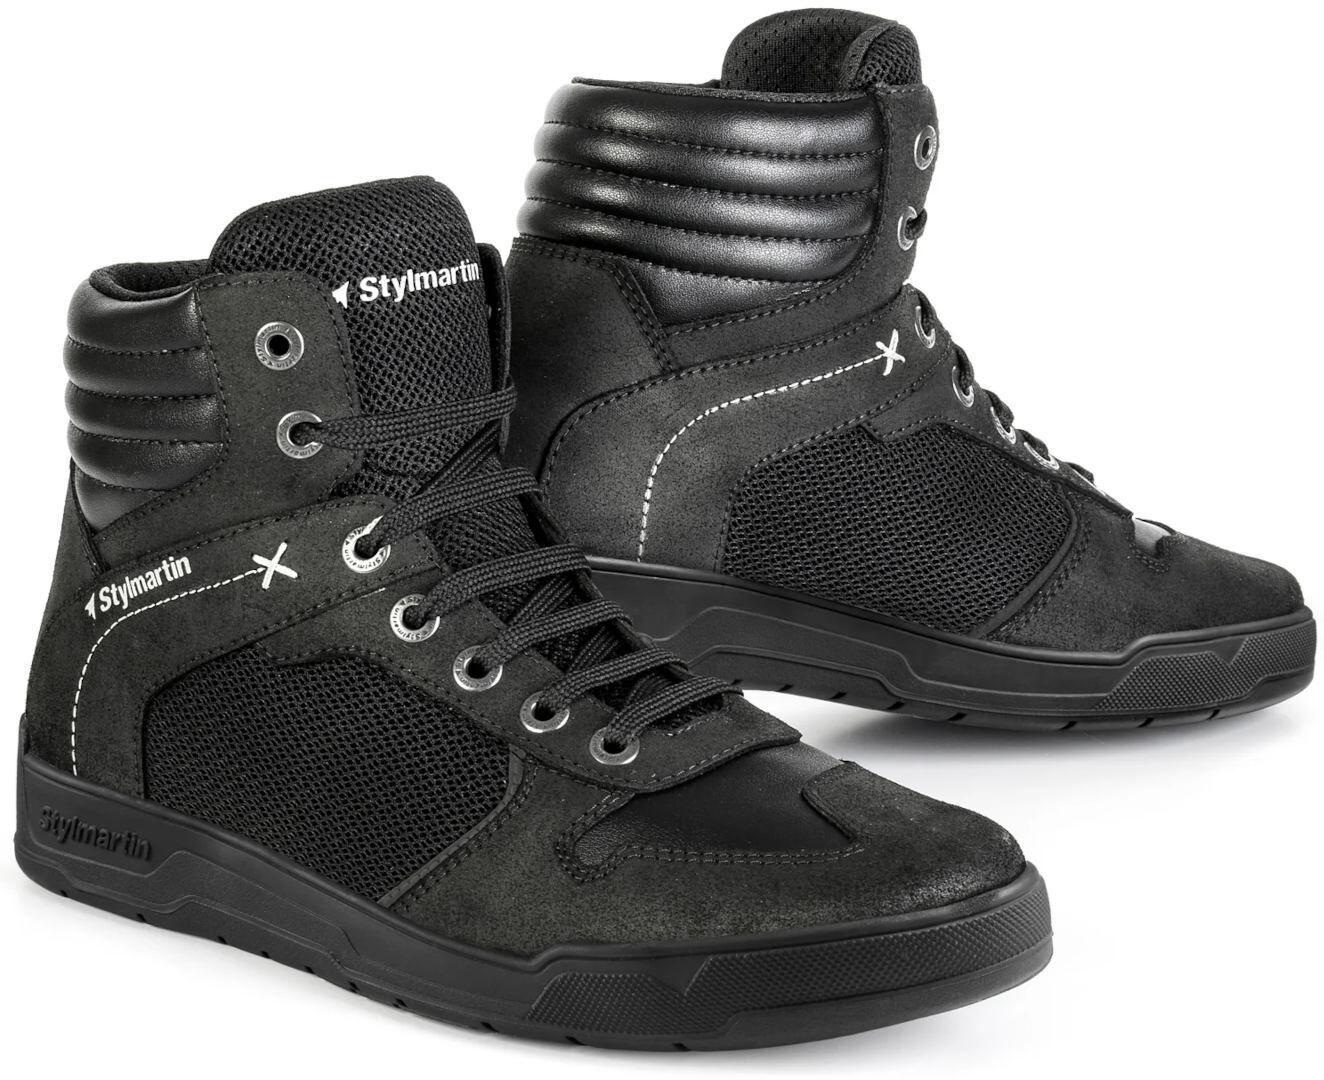 Stylmartin Atom Evo Zapatos de moto - Negro (42)